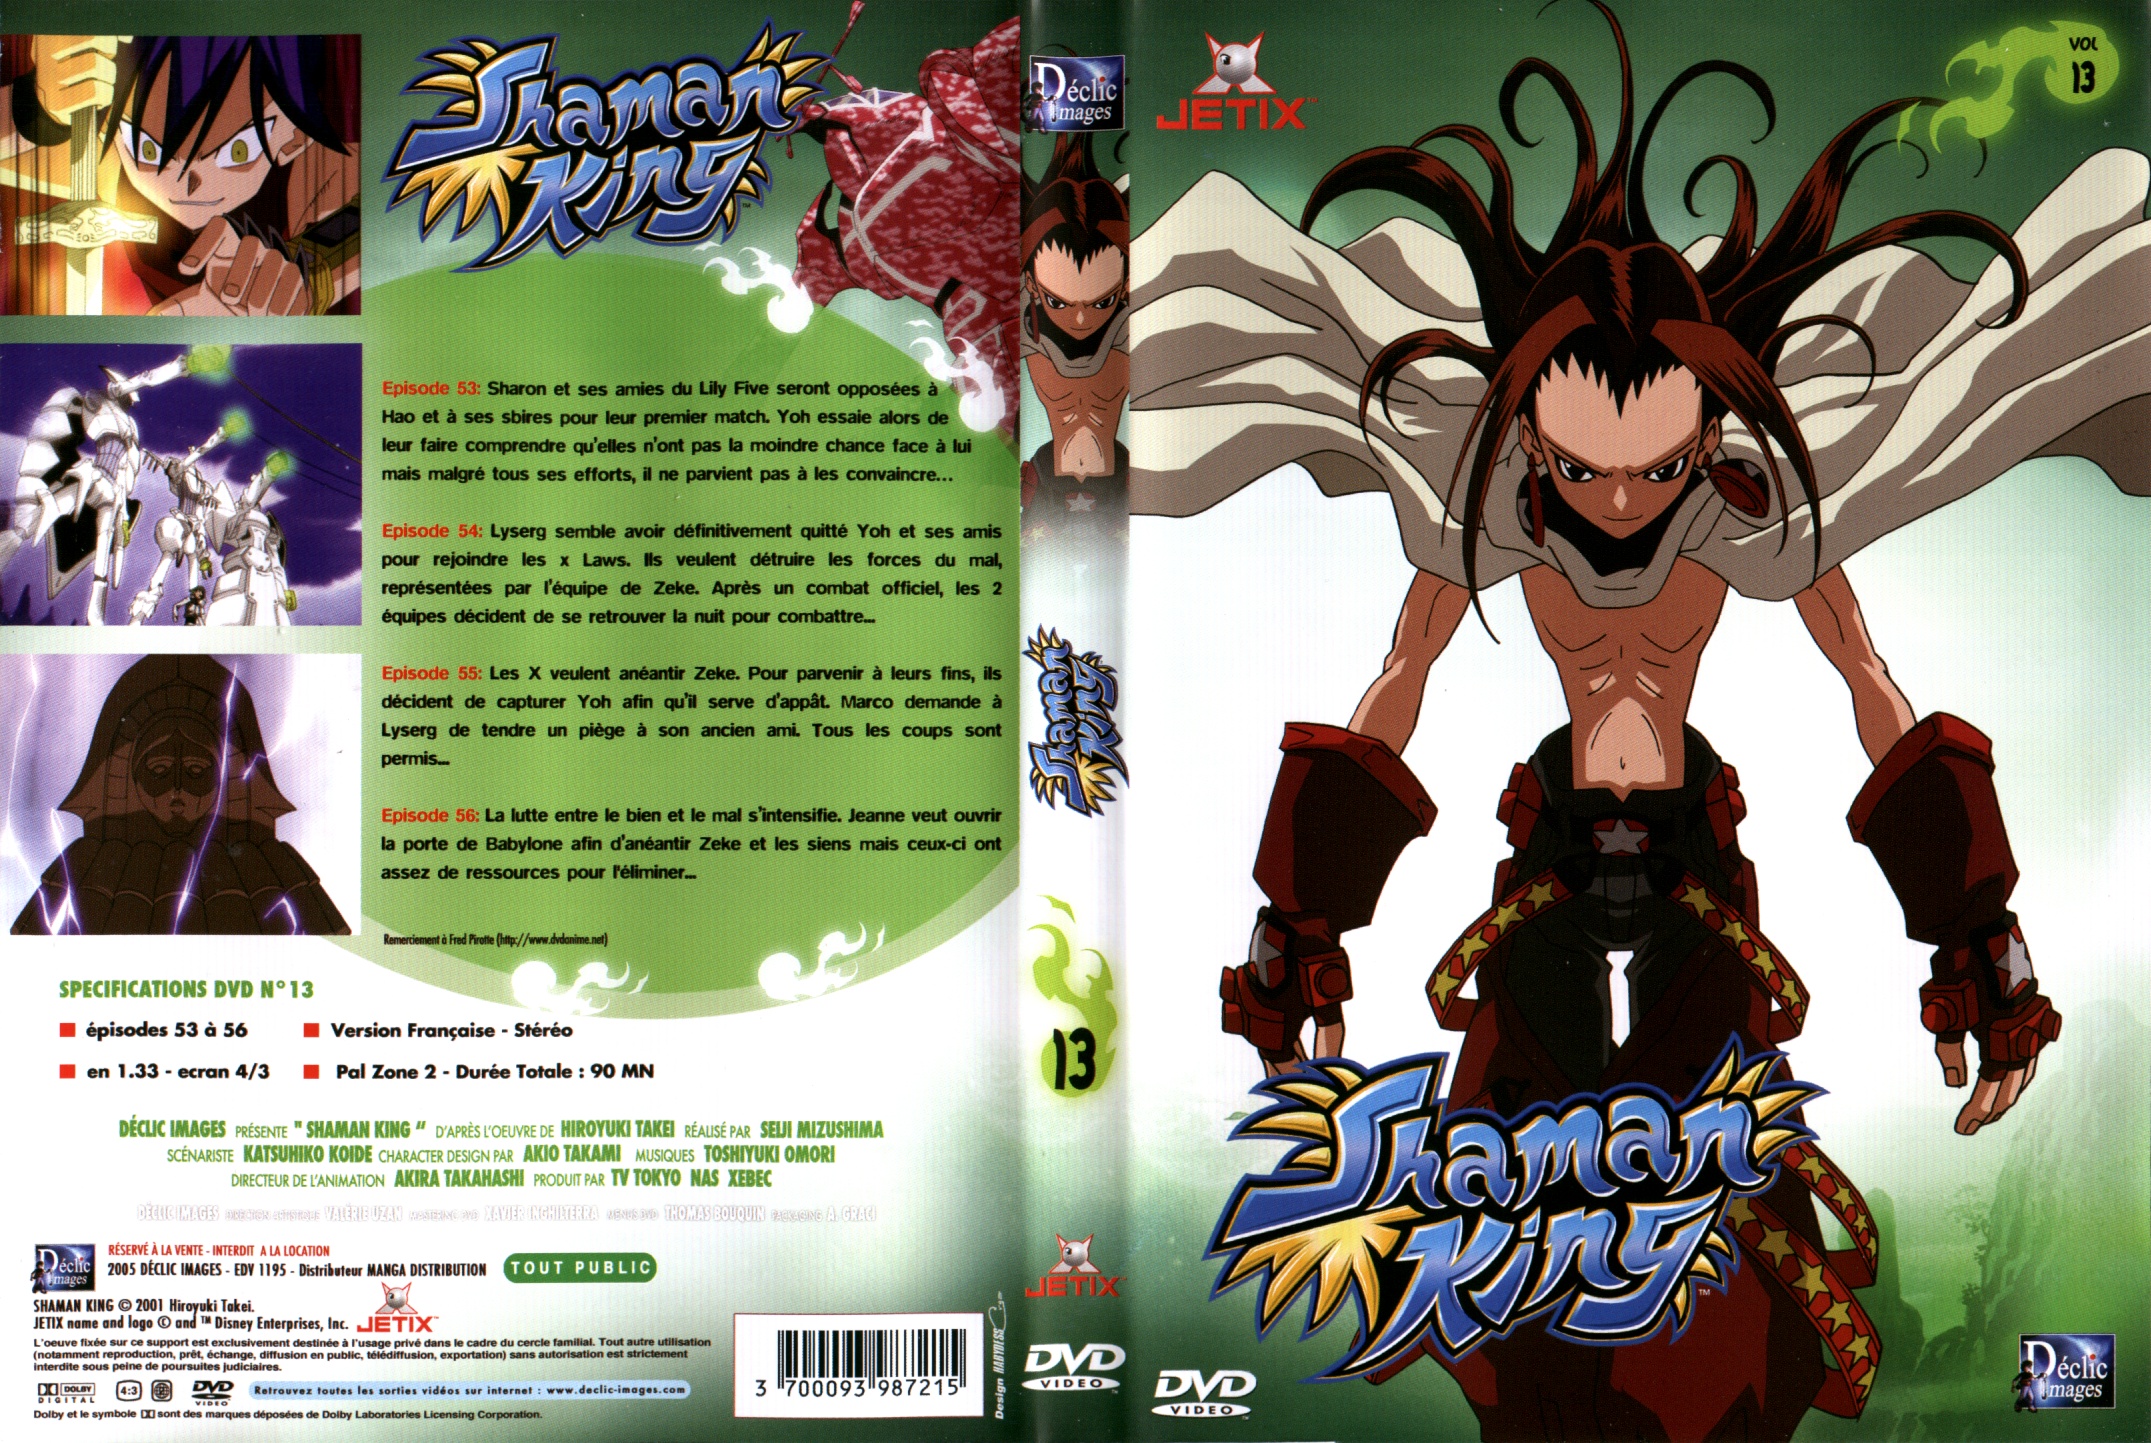 Jaquette DVD Shaman King vol 13